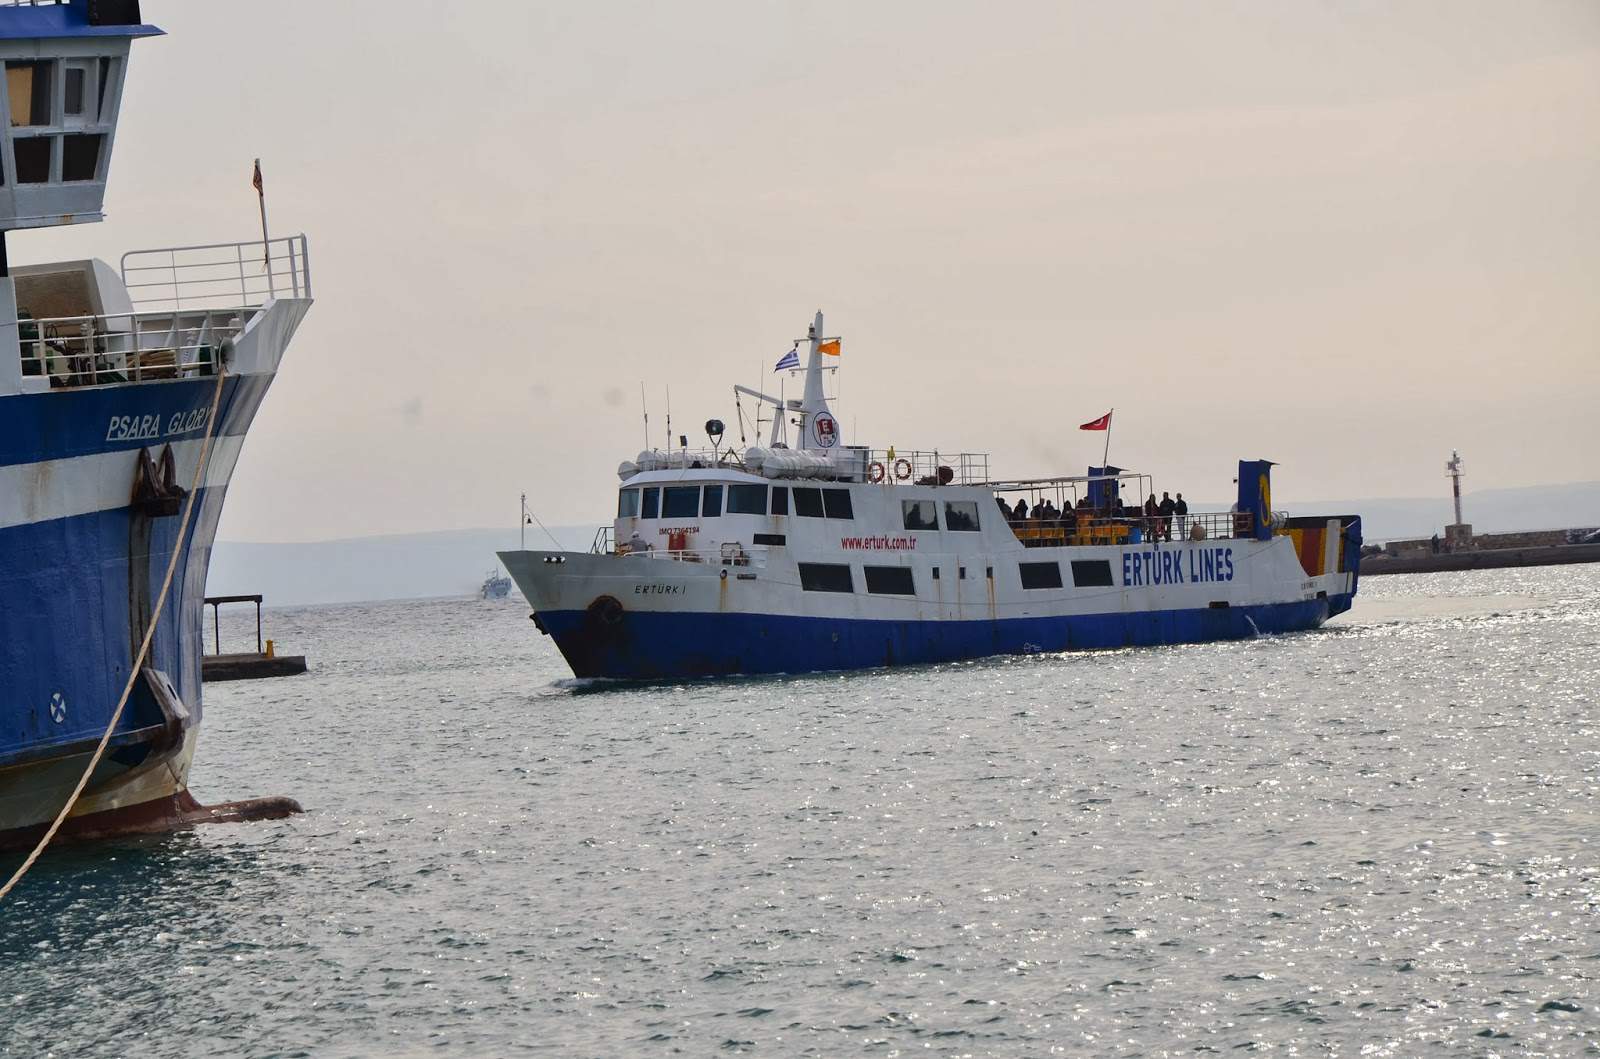 Ertürk Lines (ferry between Chios and Çeşme, Turkey) in Chios, Greece